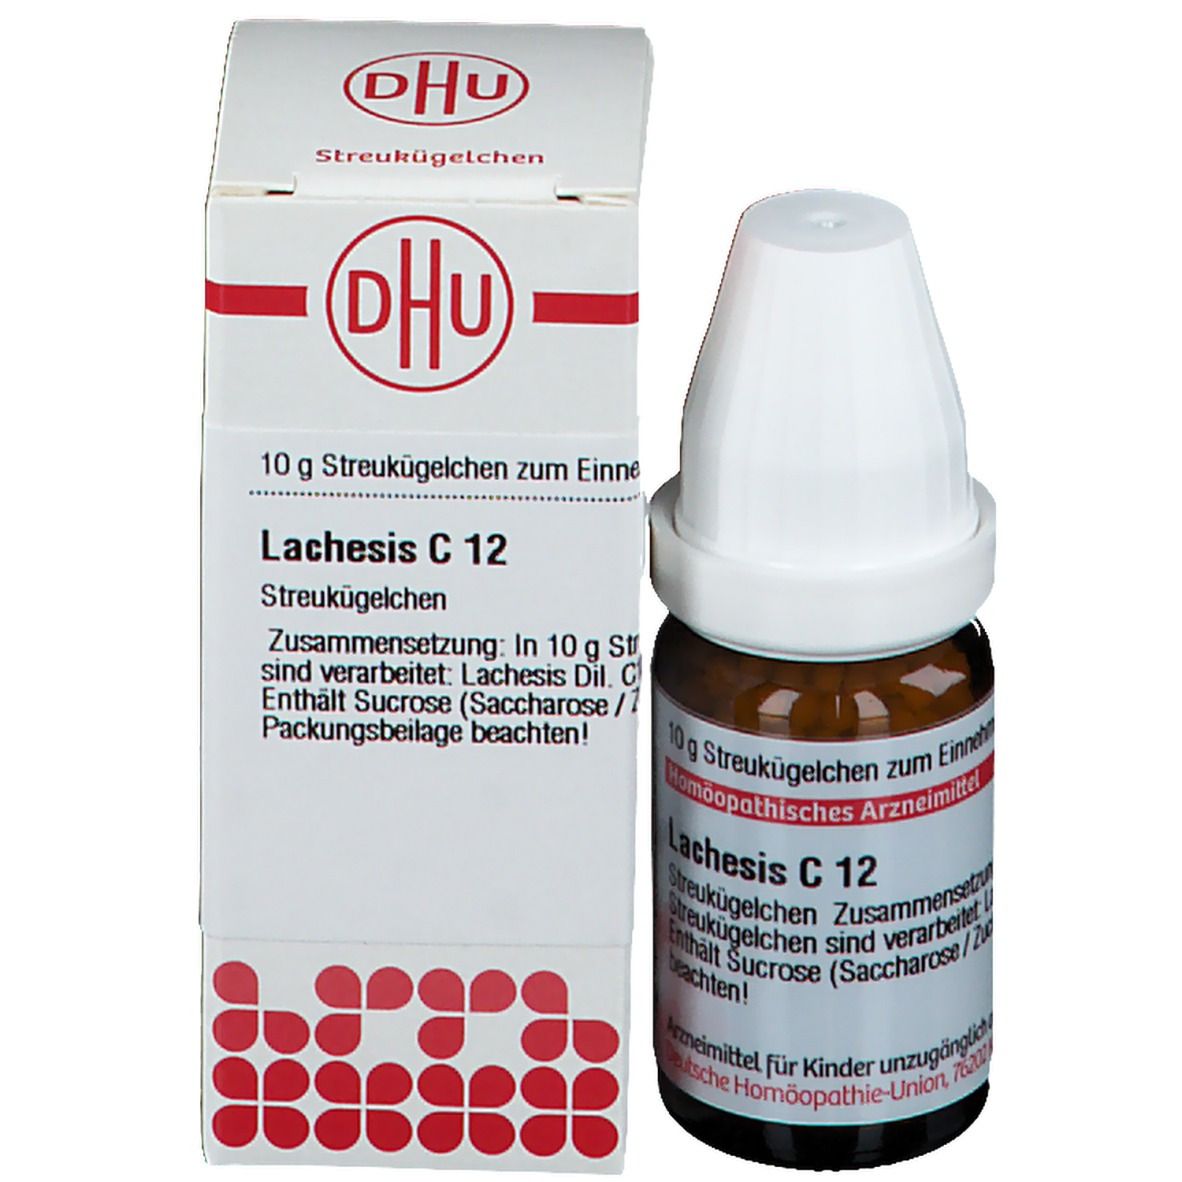 DHU Lachesis C12